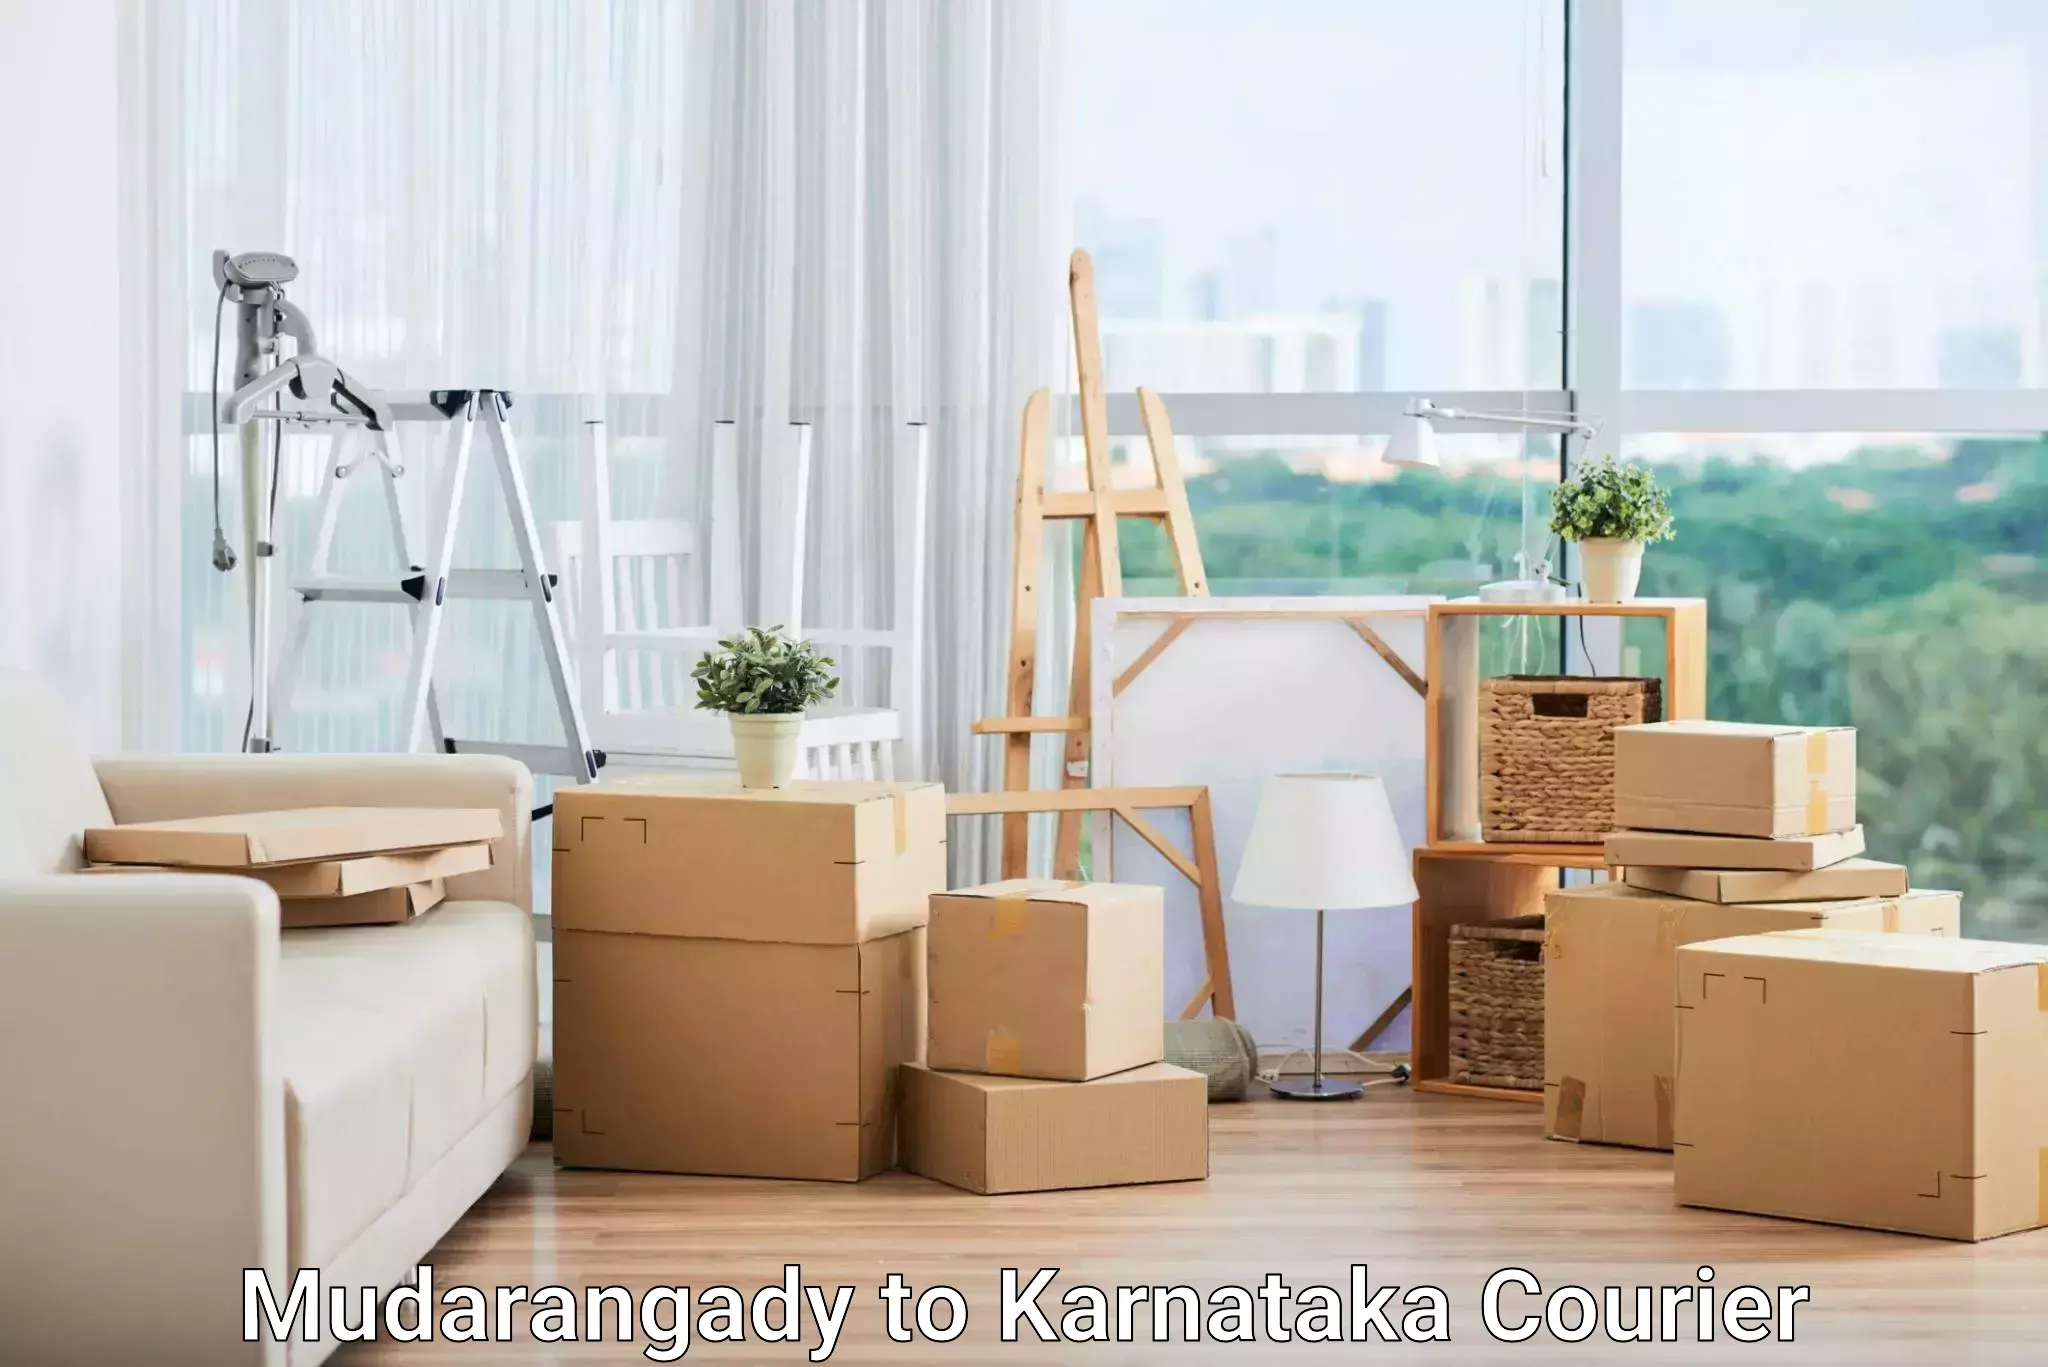 Same-day delivery solutions Mudarangady to Karnataka